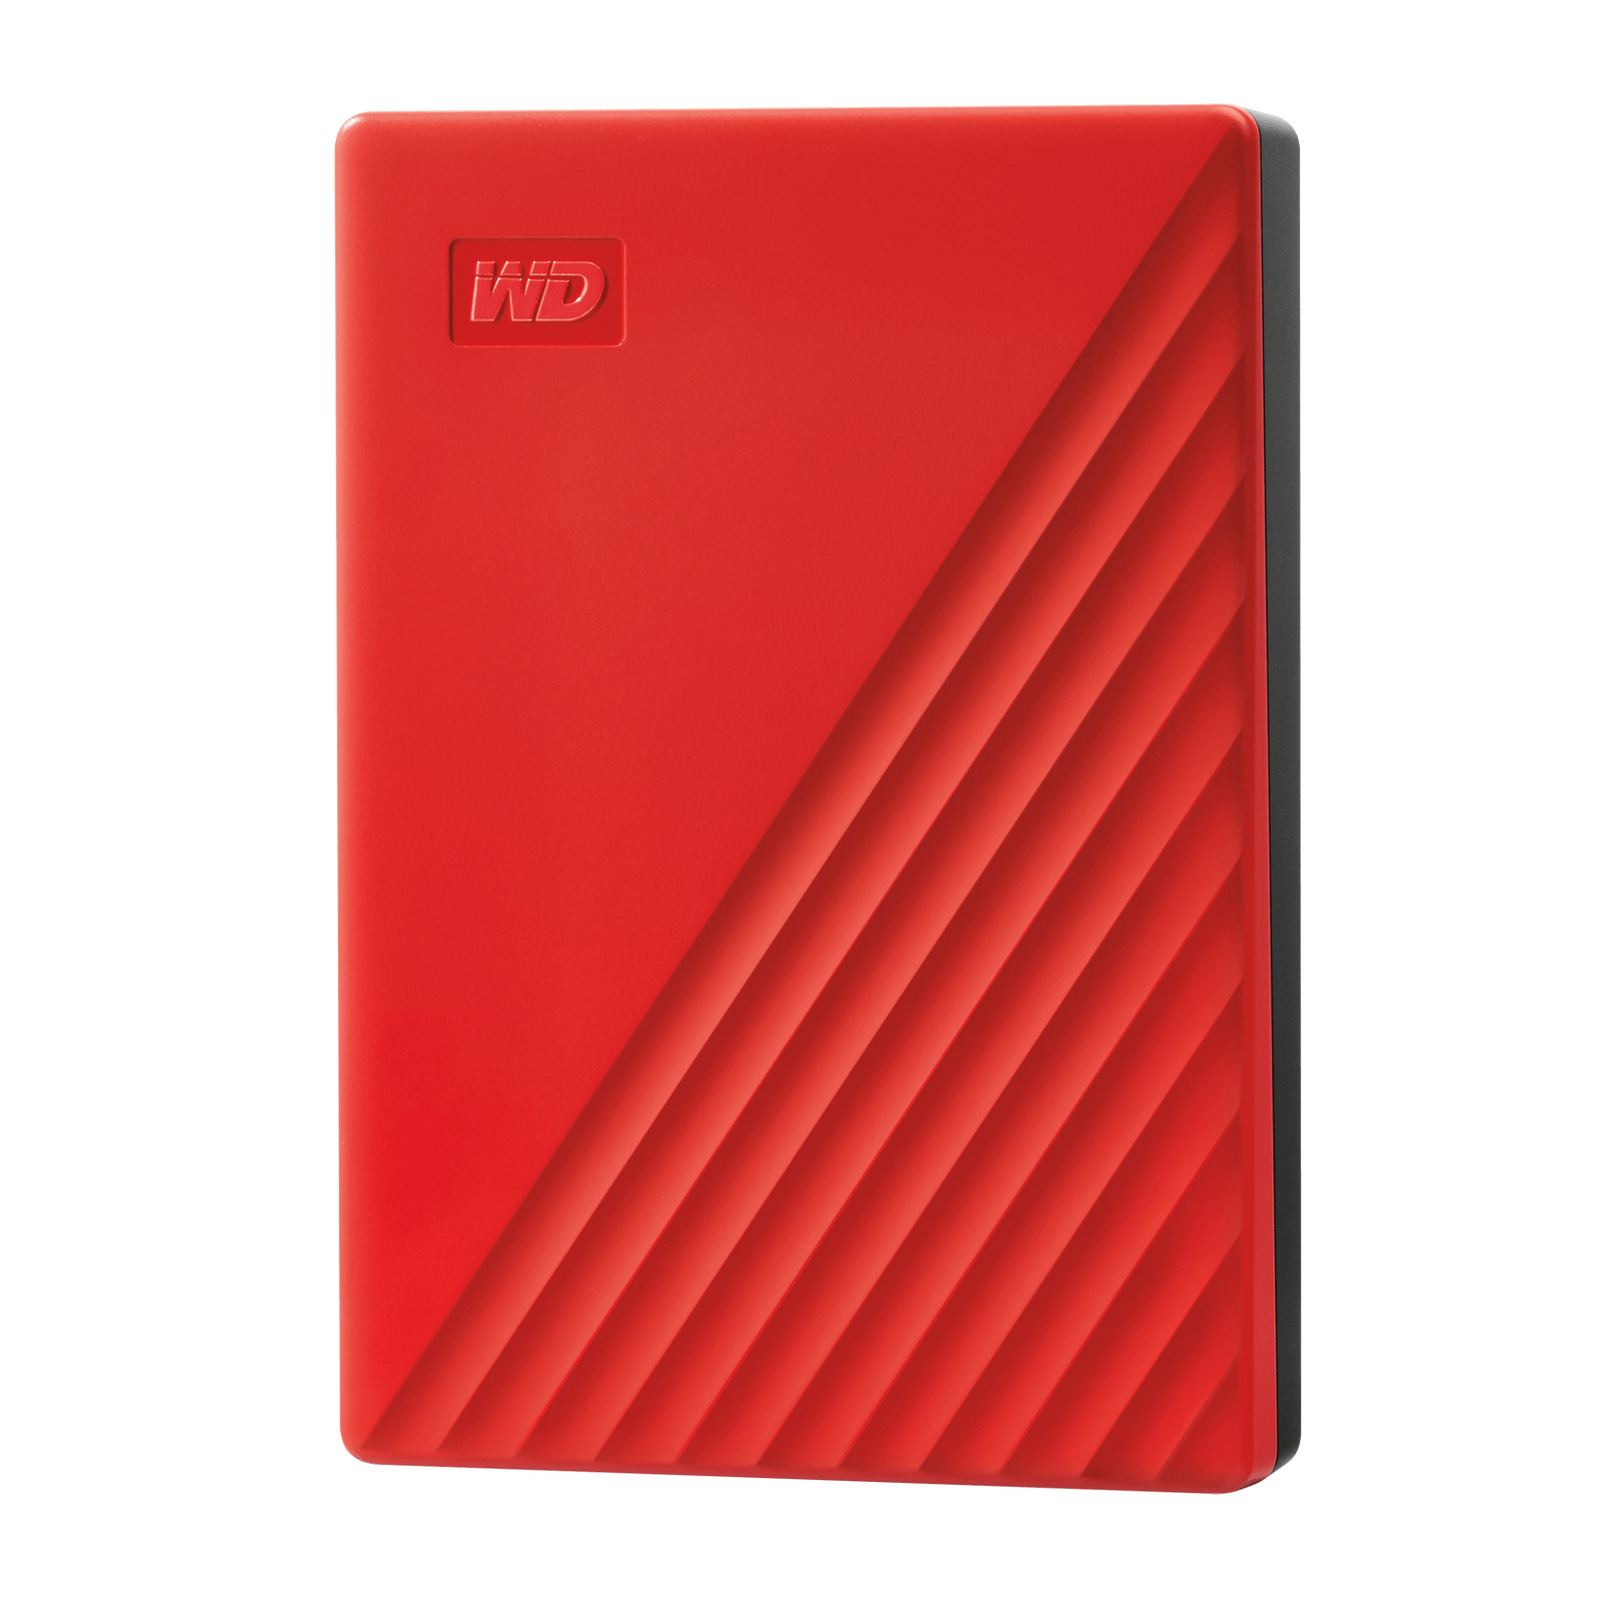 WD 4TB My Passport, Portable External Hard Drive, Red - WDBPKJ0040BRD-WESN